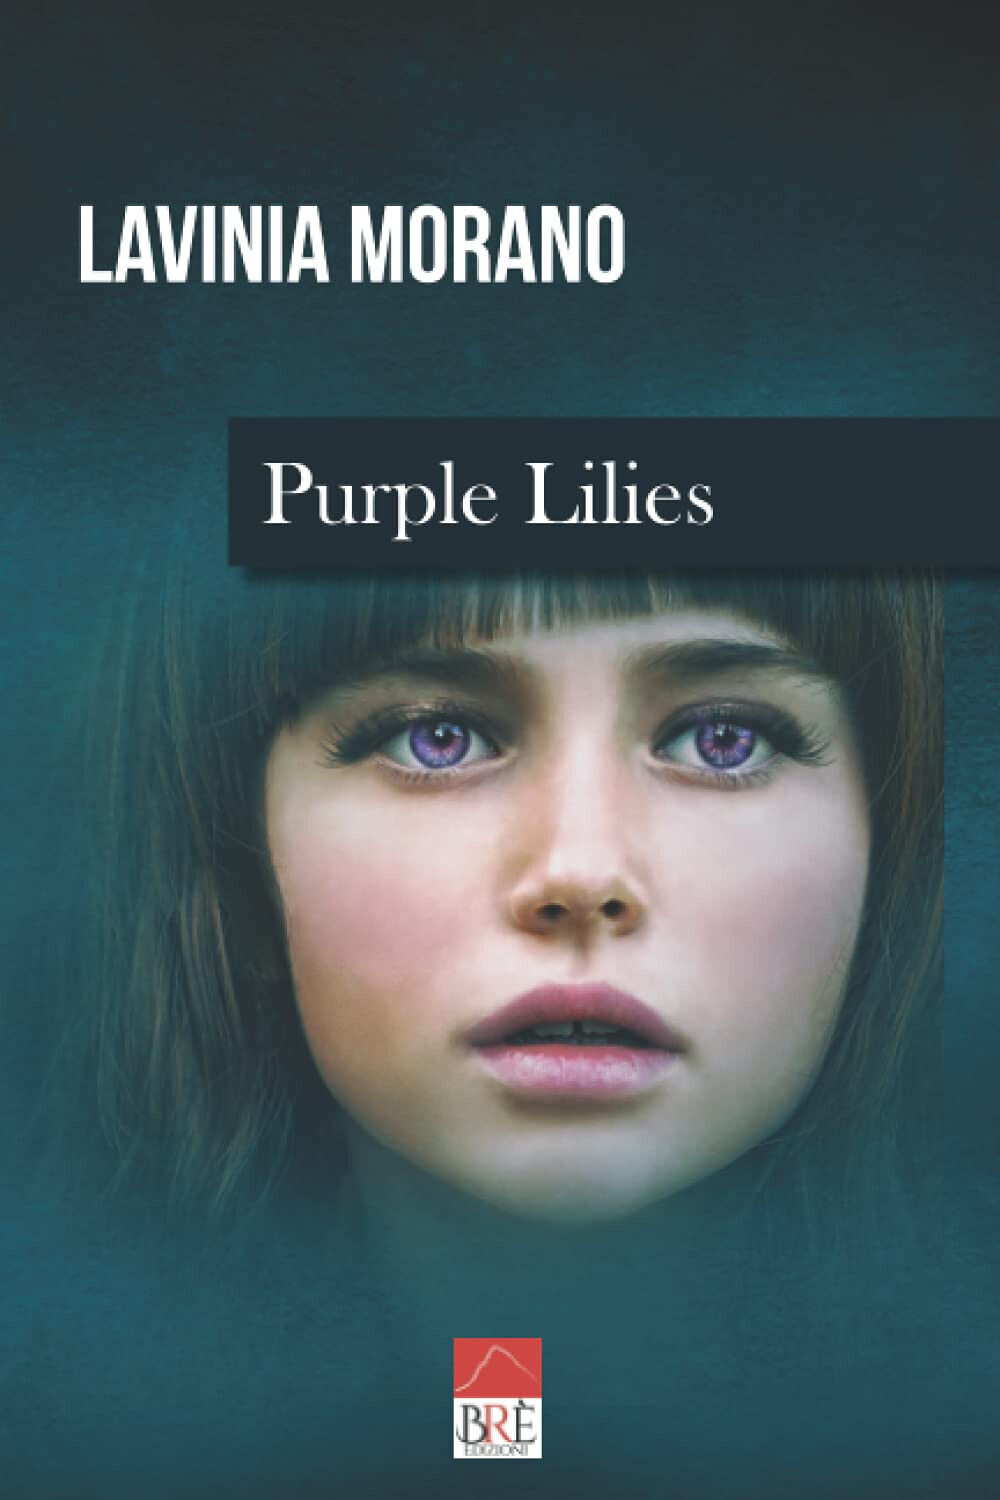 Purple lilies - Lavinia Morano - Br?, 2019